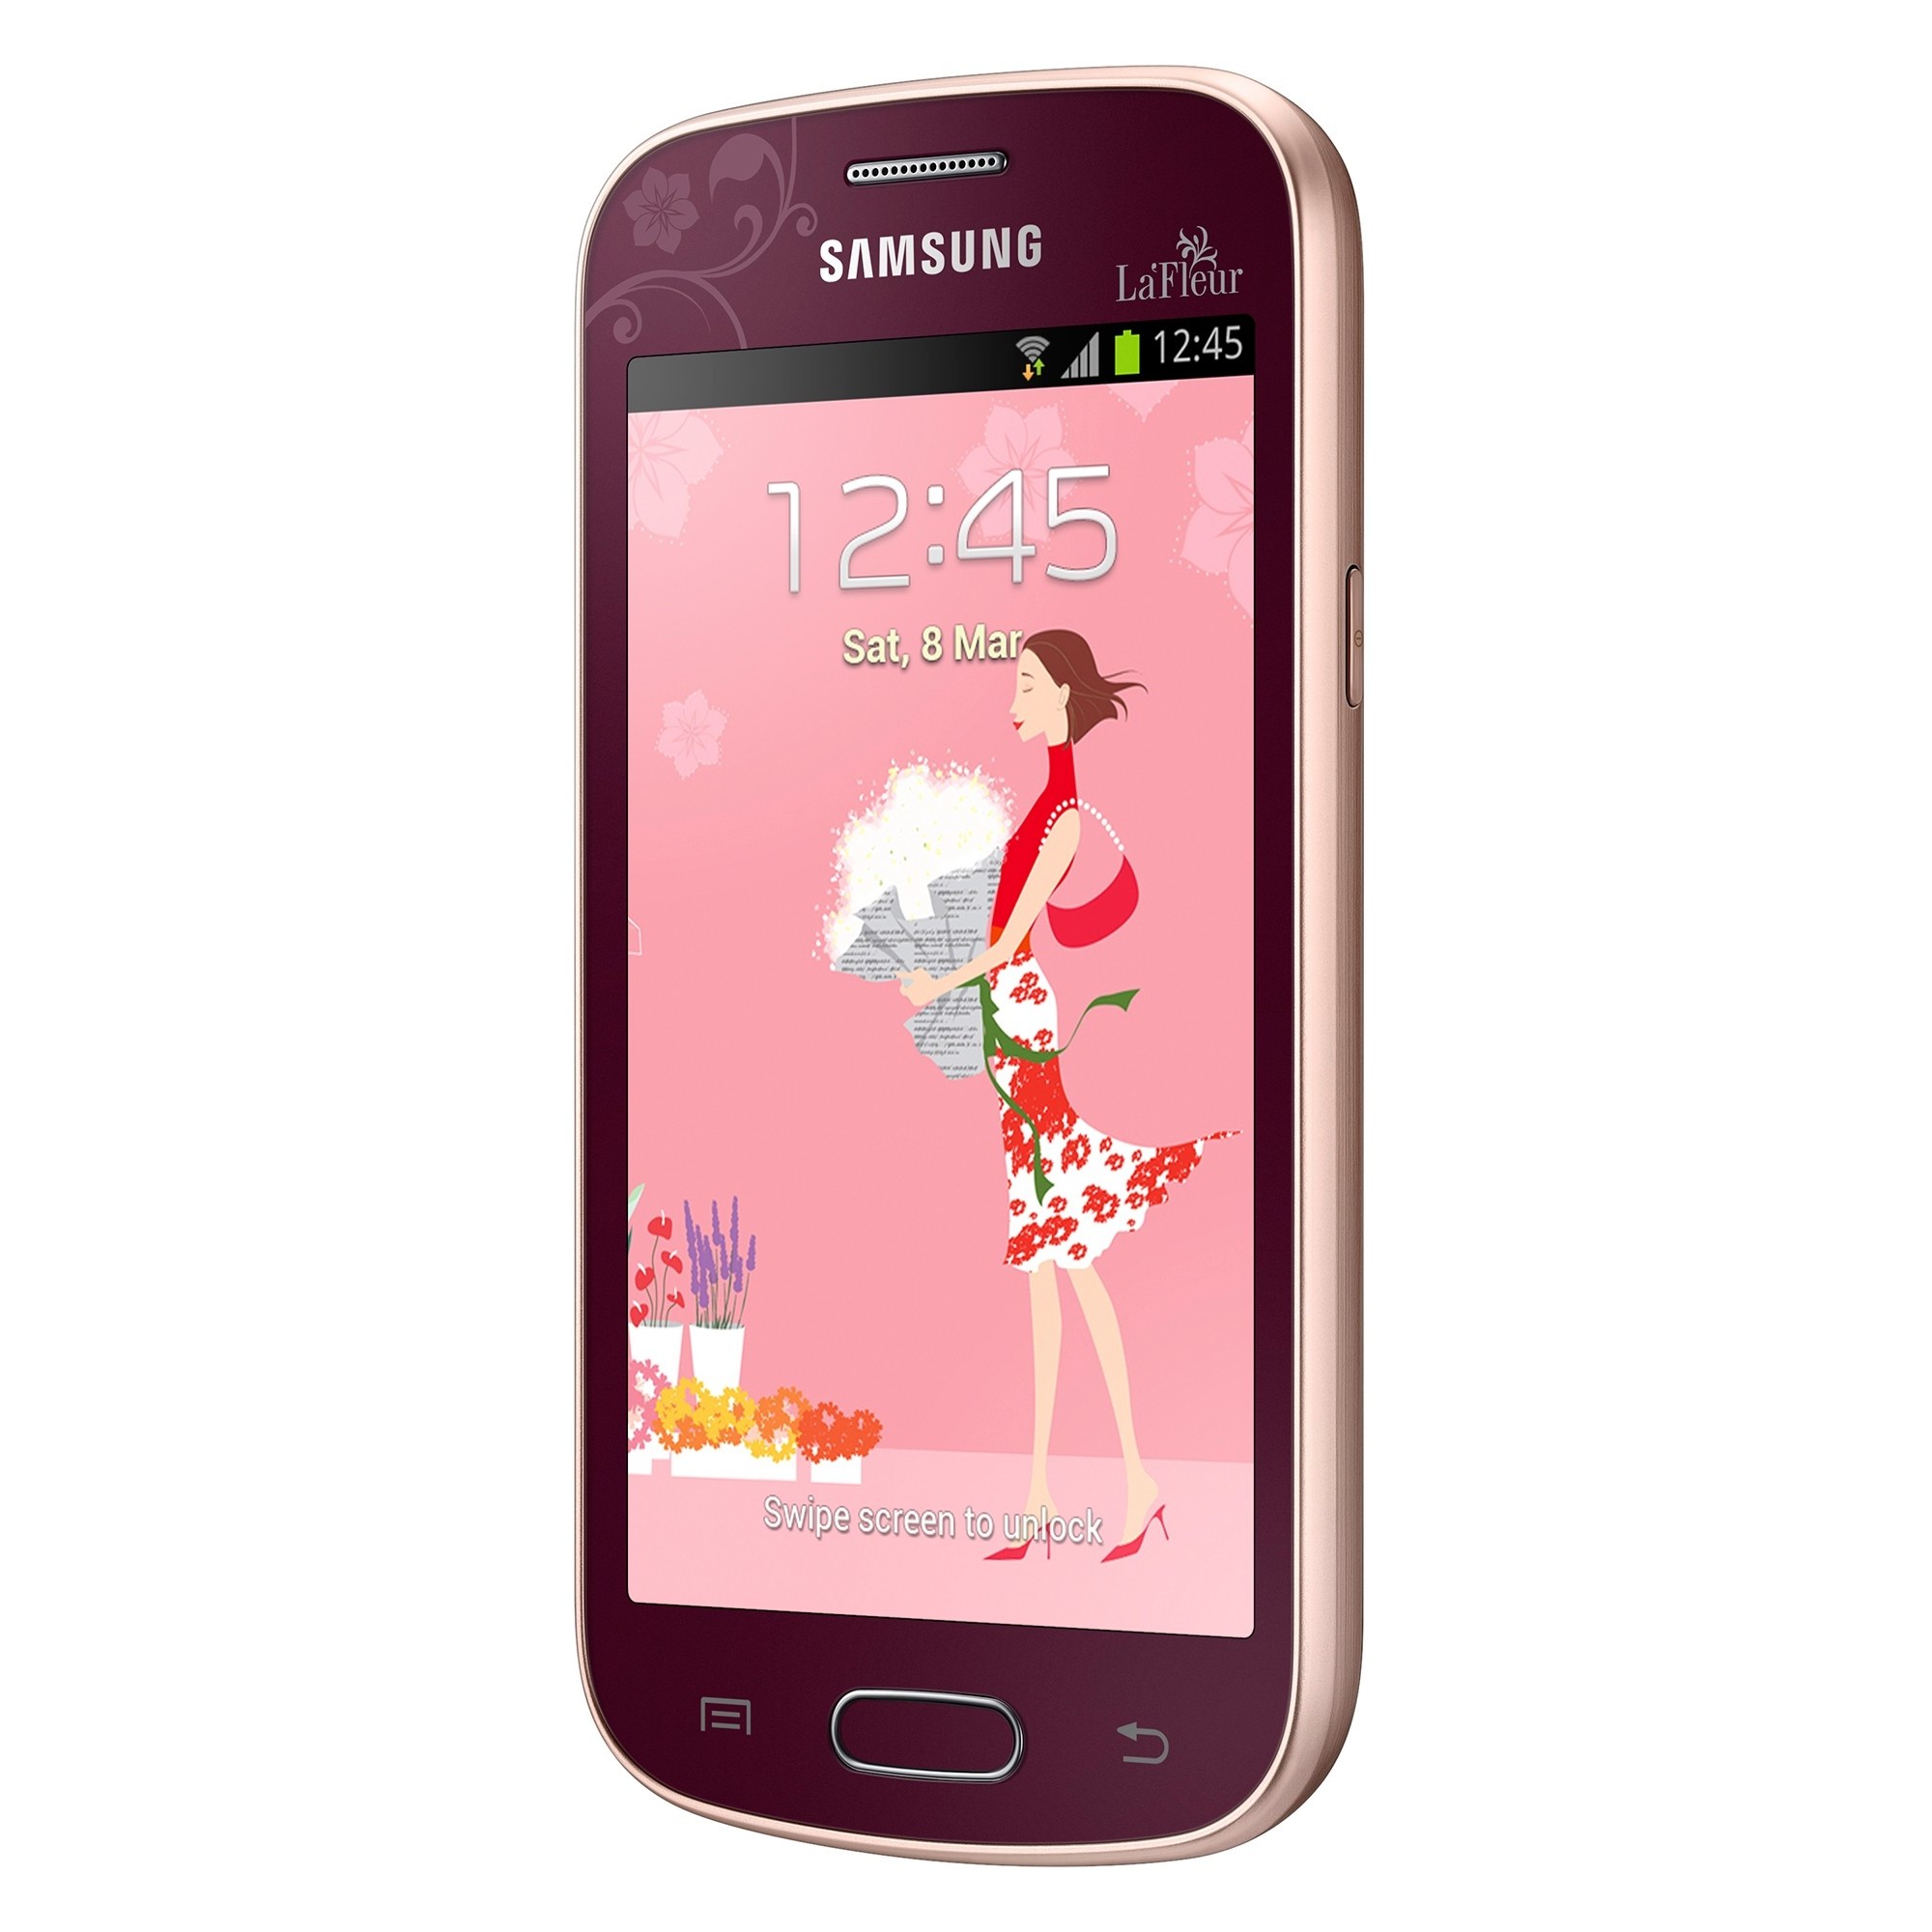 Телефон флер. Samsung Galaxy trend gt-s7390. Samsung Galaxy trend la fleur. Самсунг la fleur раскладушка. Samsung la fleur 2007.